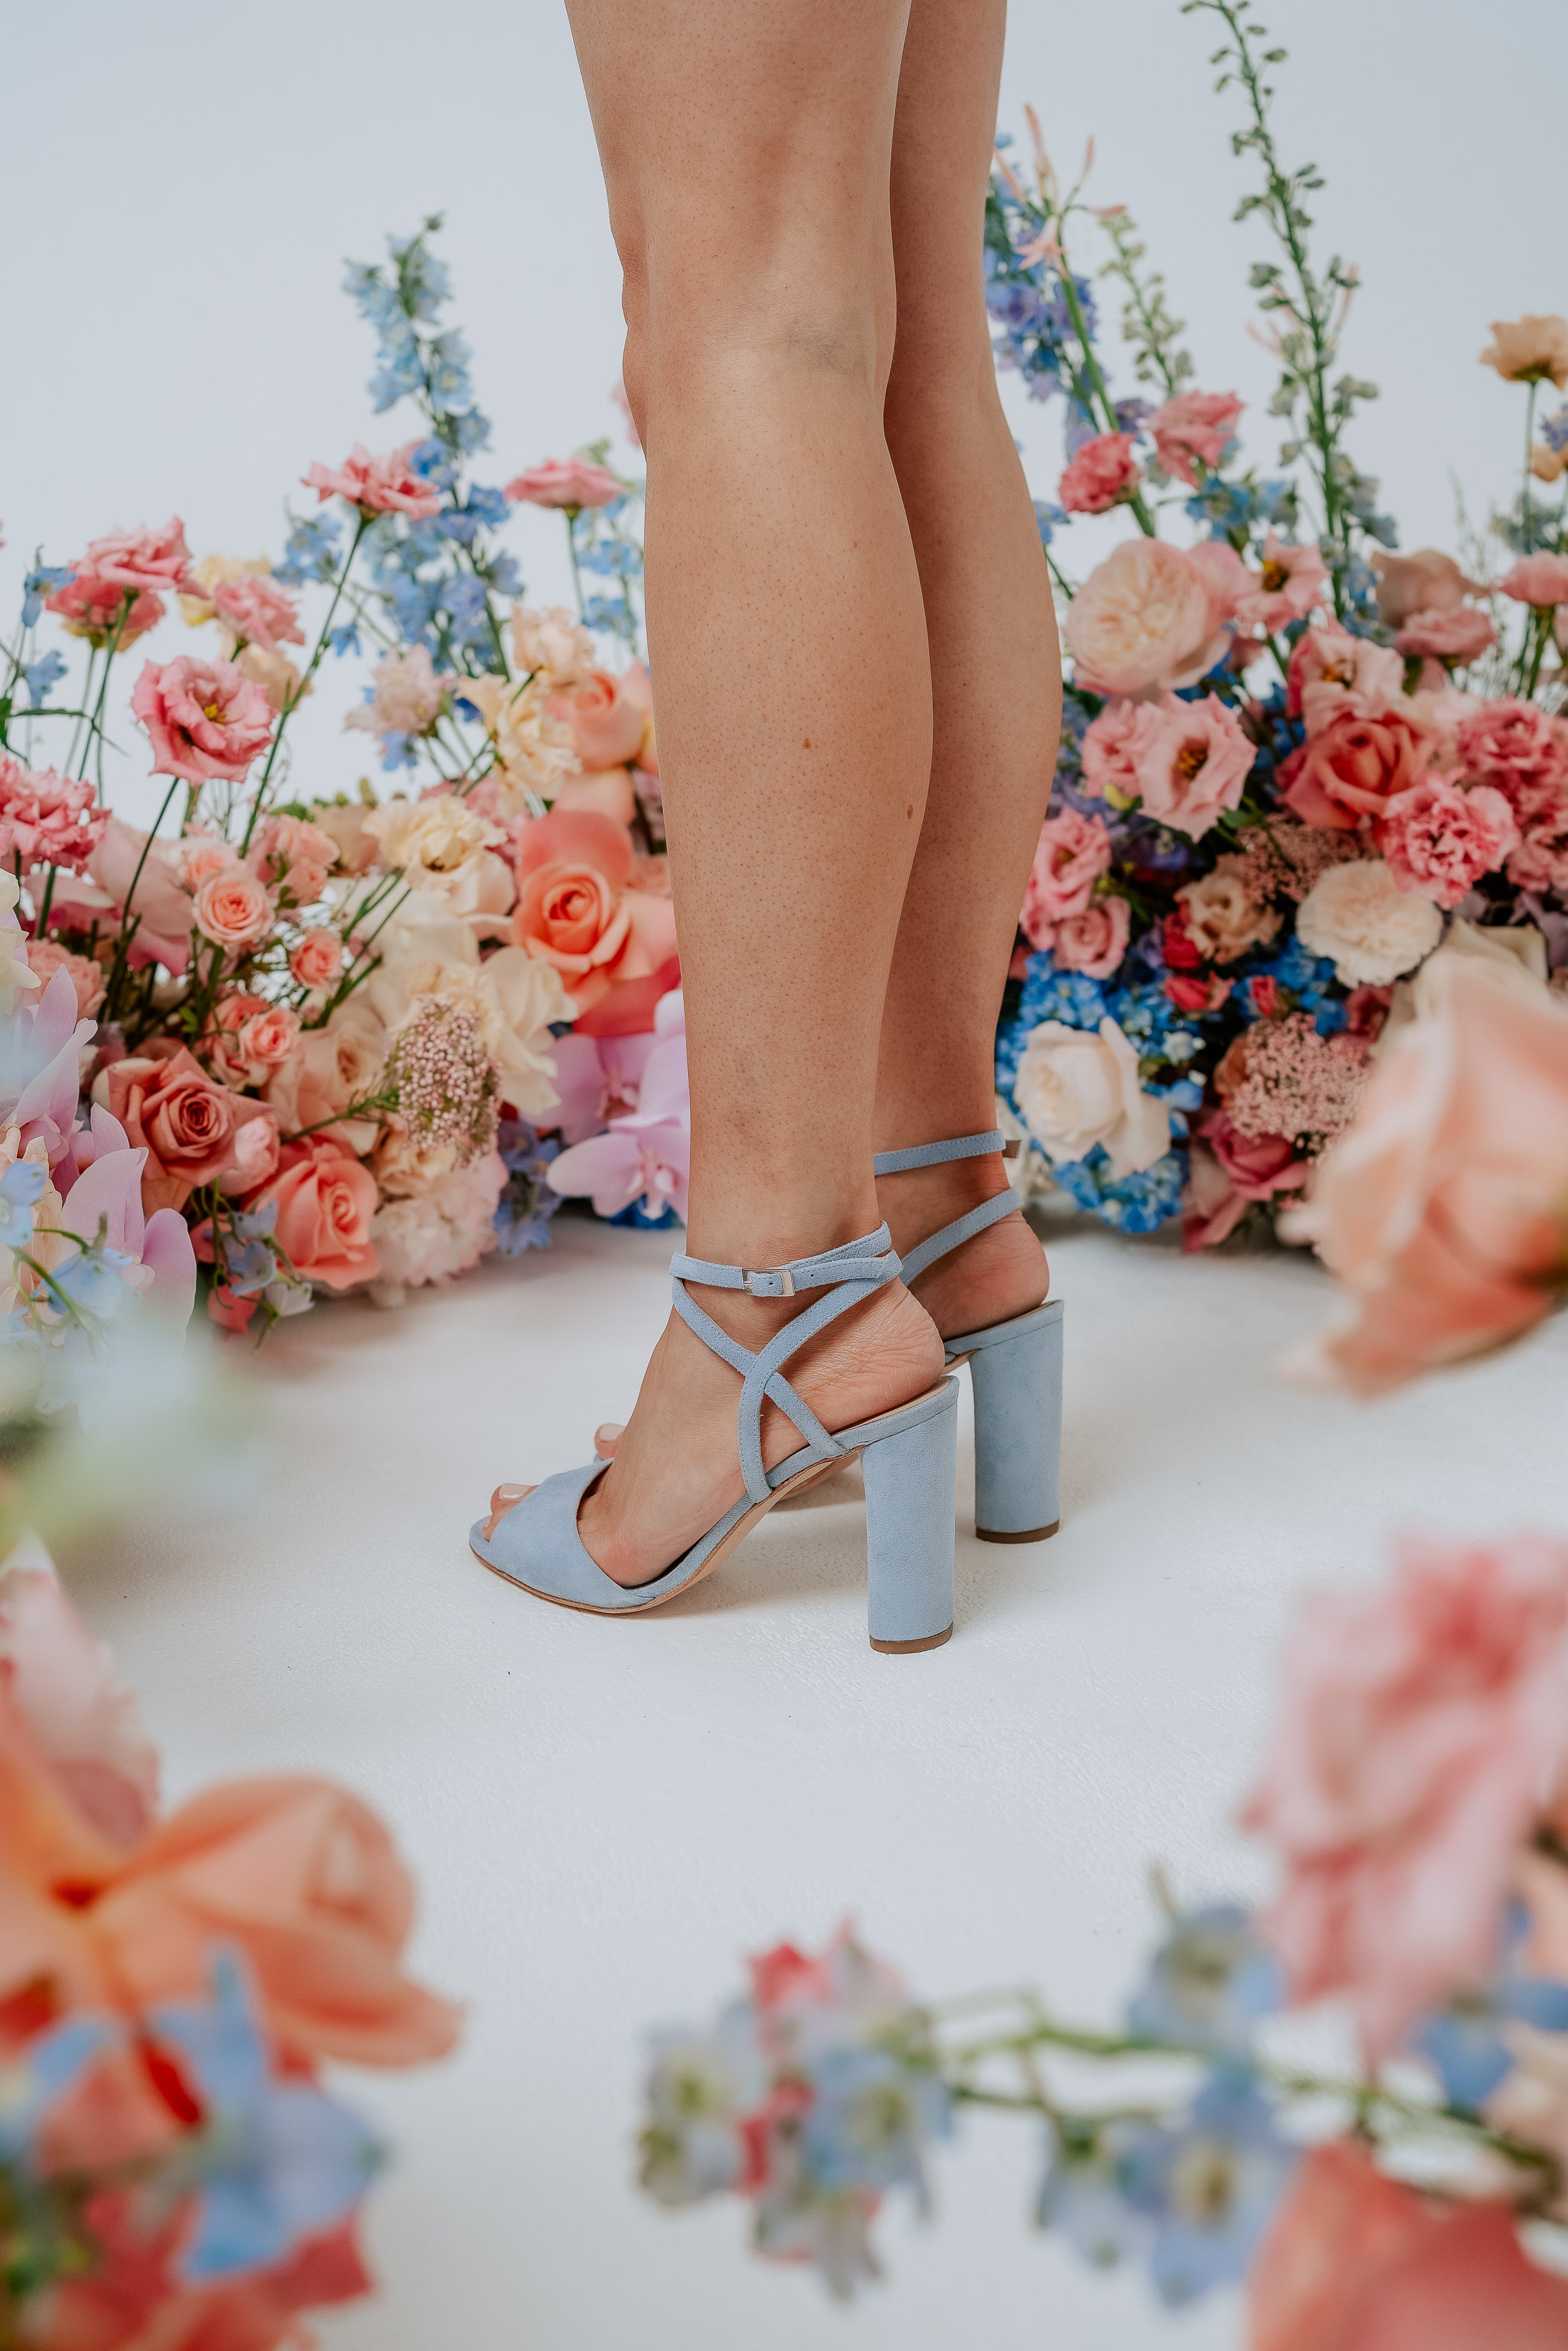 BLUE ANKLE STRAPS, Baby Blue High Heels, Light Blue Suede Shoes, Wedding  Heels, Bridal Block Heels, Barbie Lolita Shoes, Vegan Gift for Her - Etsy |  Blue high heels, Blue shoes outfit,